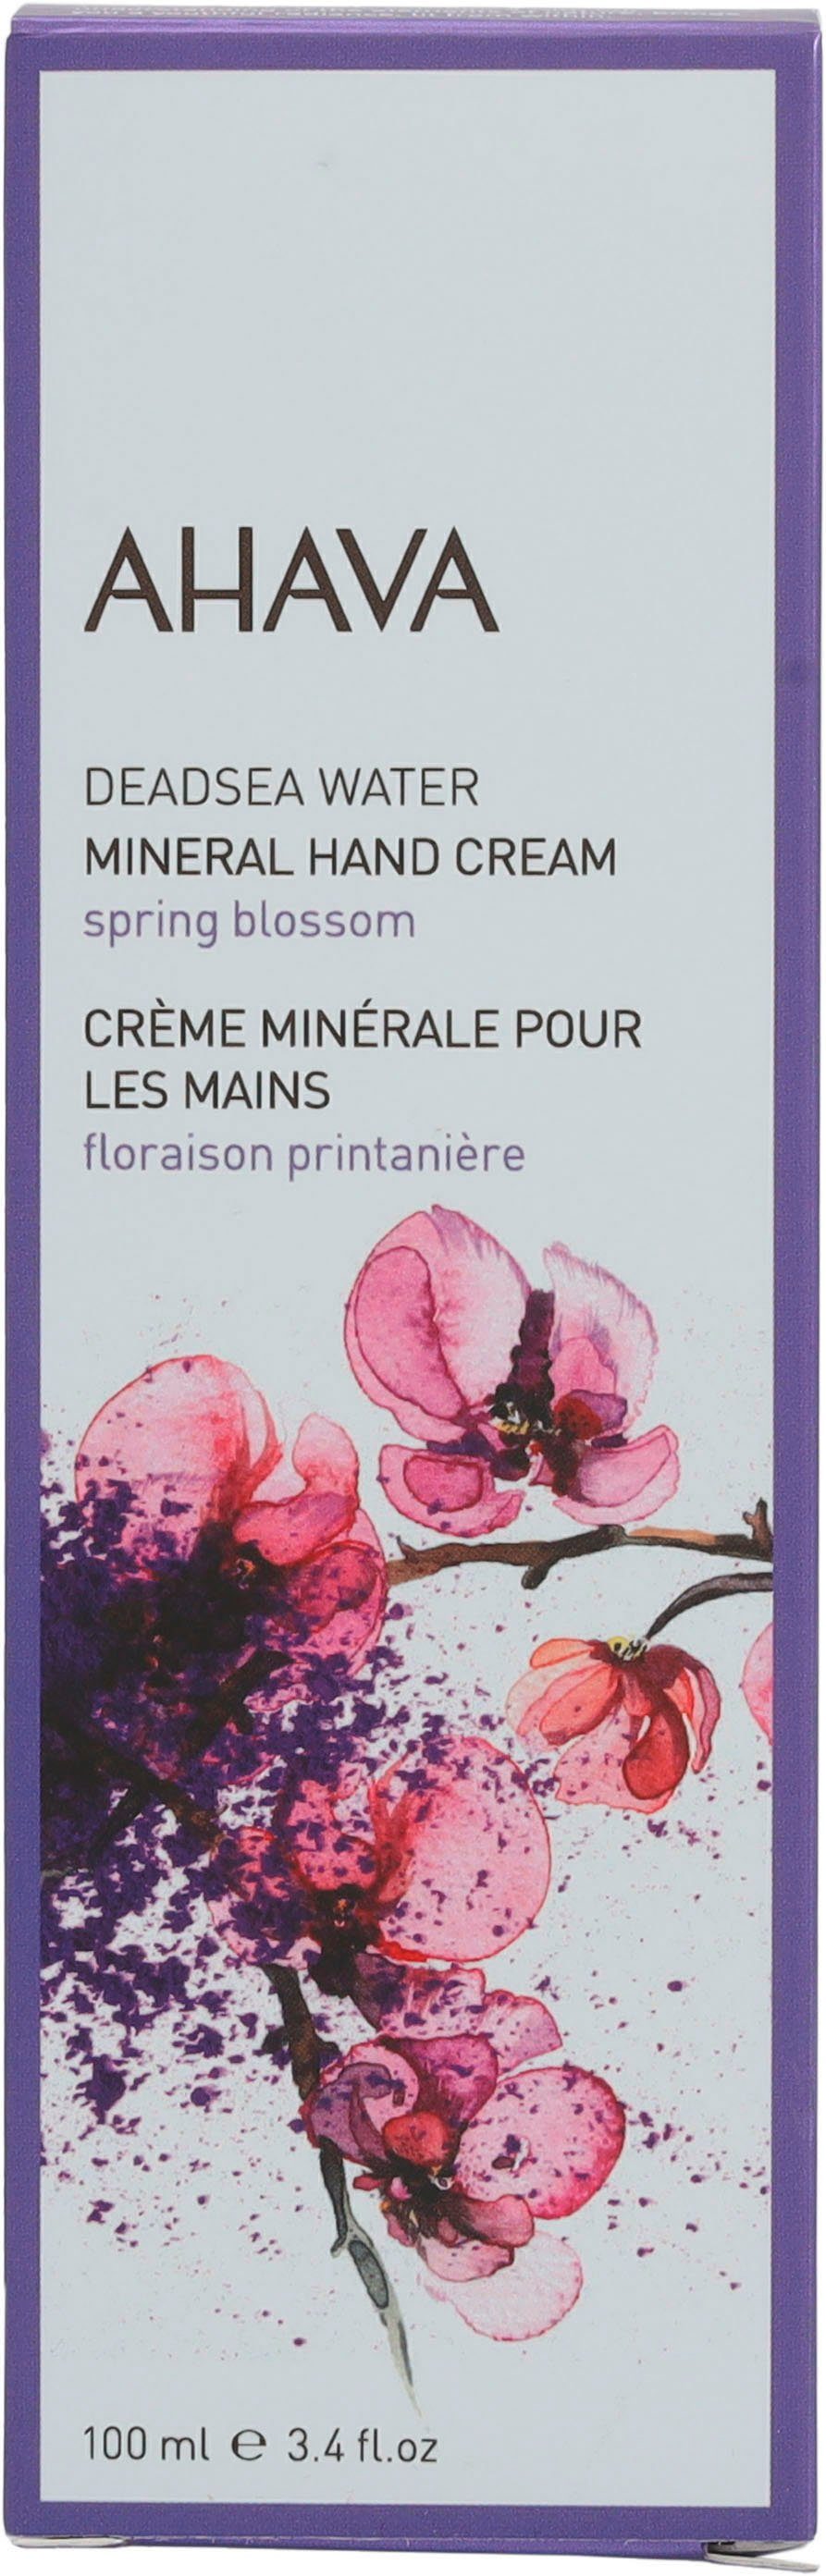 Handcreme Deadsea Water Blossom Hand Spring AHAVA Cream Mineral